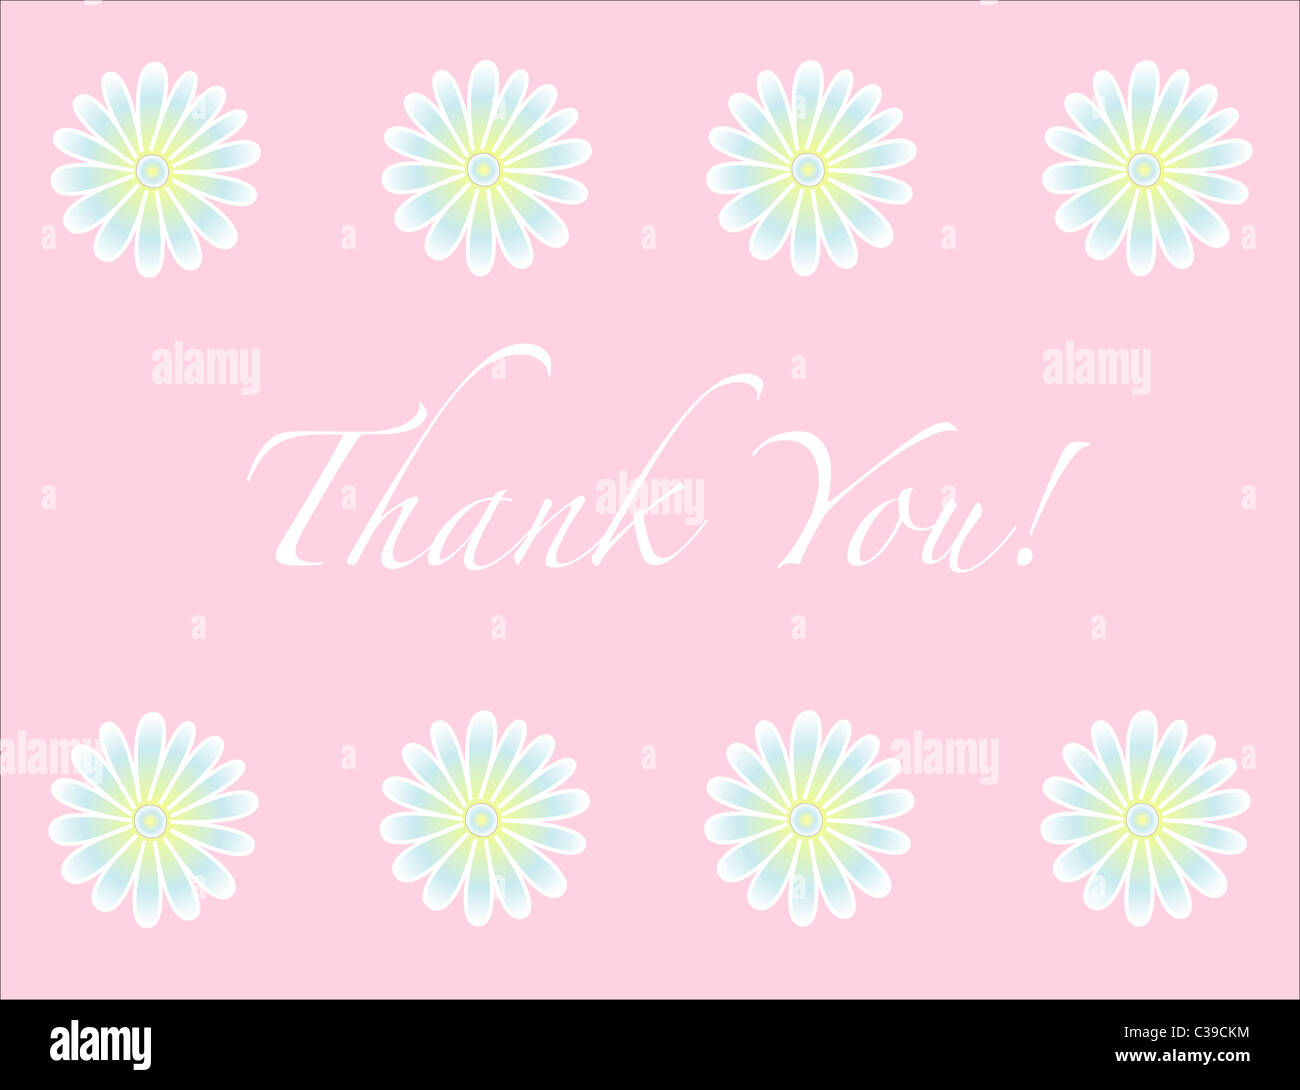 Thank You! greeting card illustration design Stock Photo